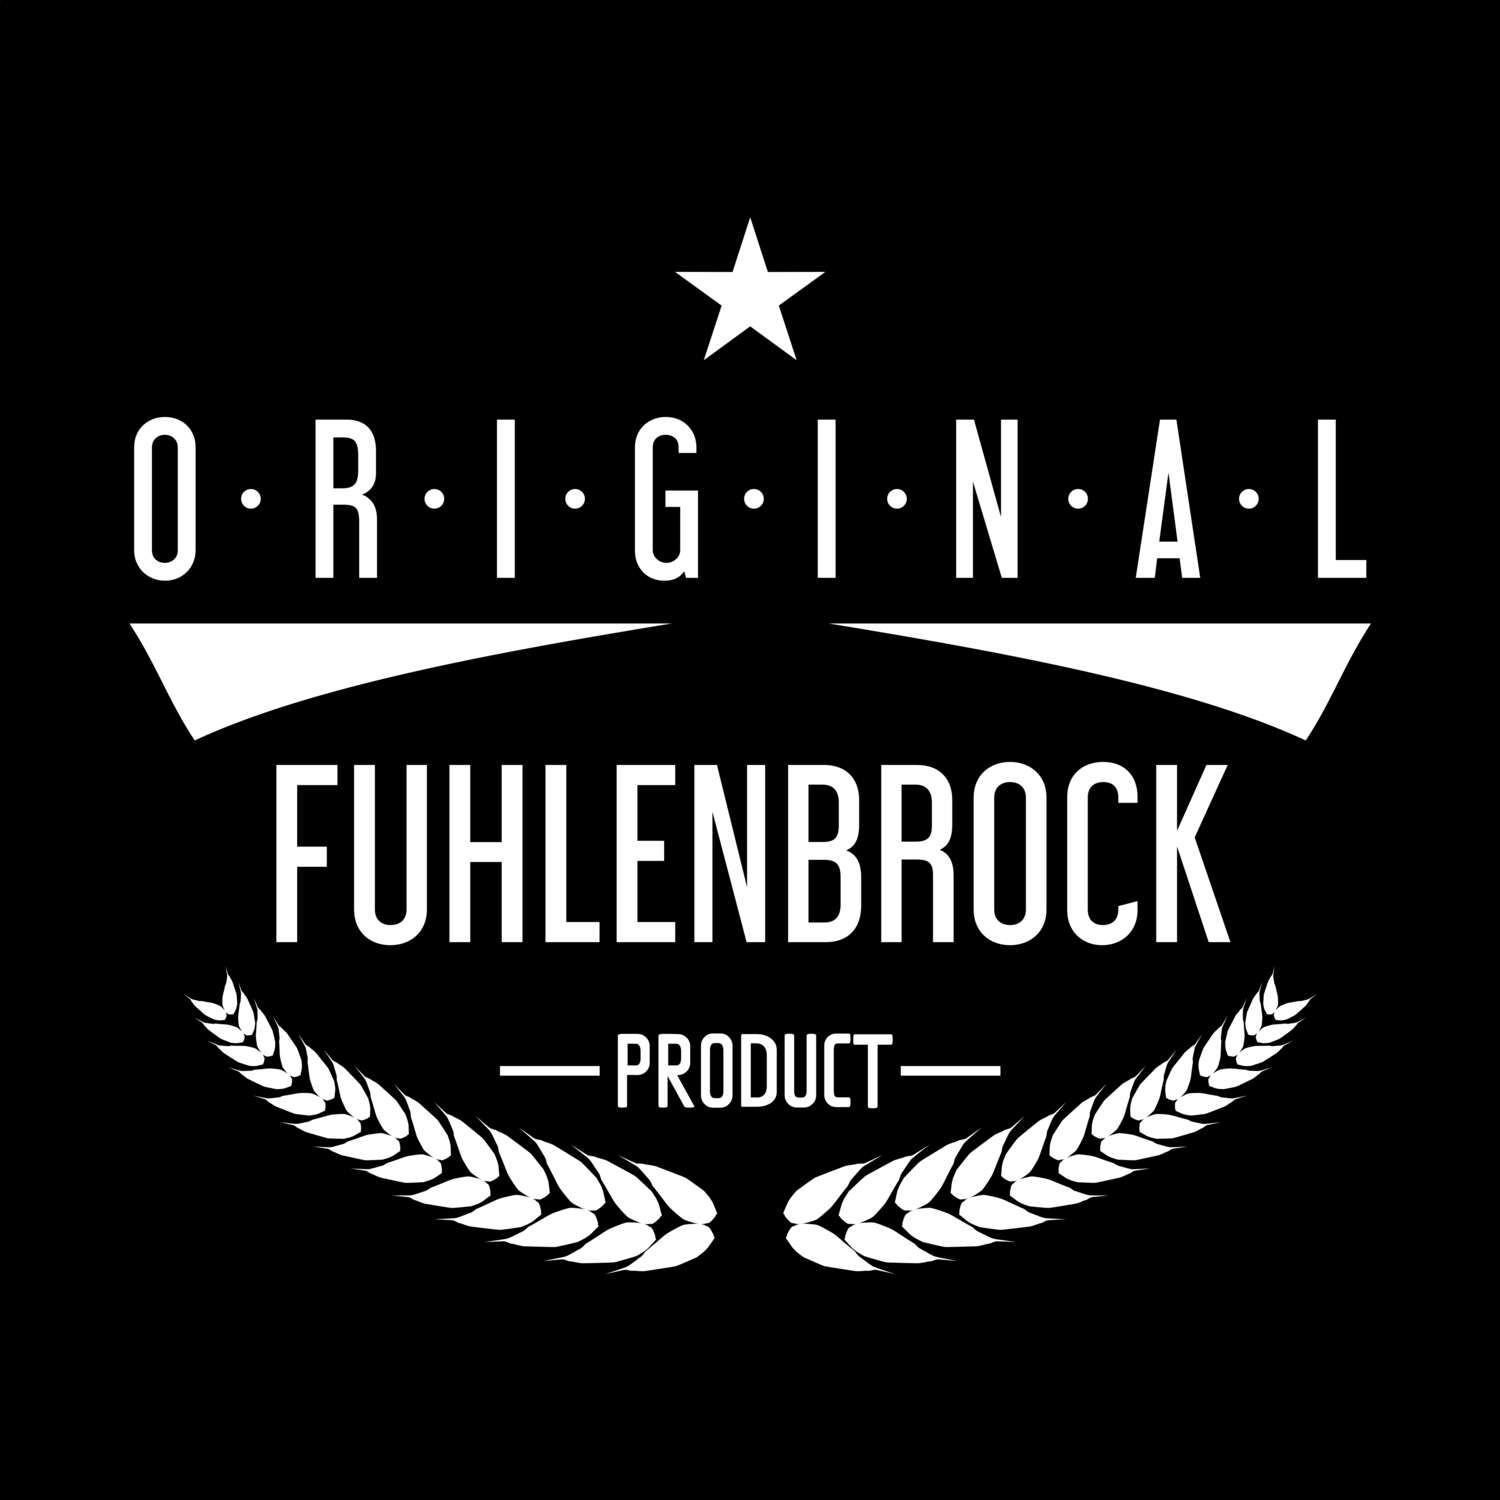 Fuhlenbrock T-Shirt »Original Product«